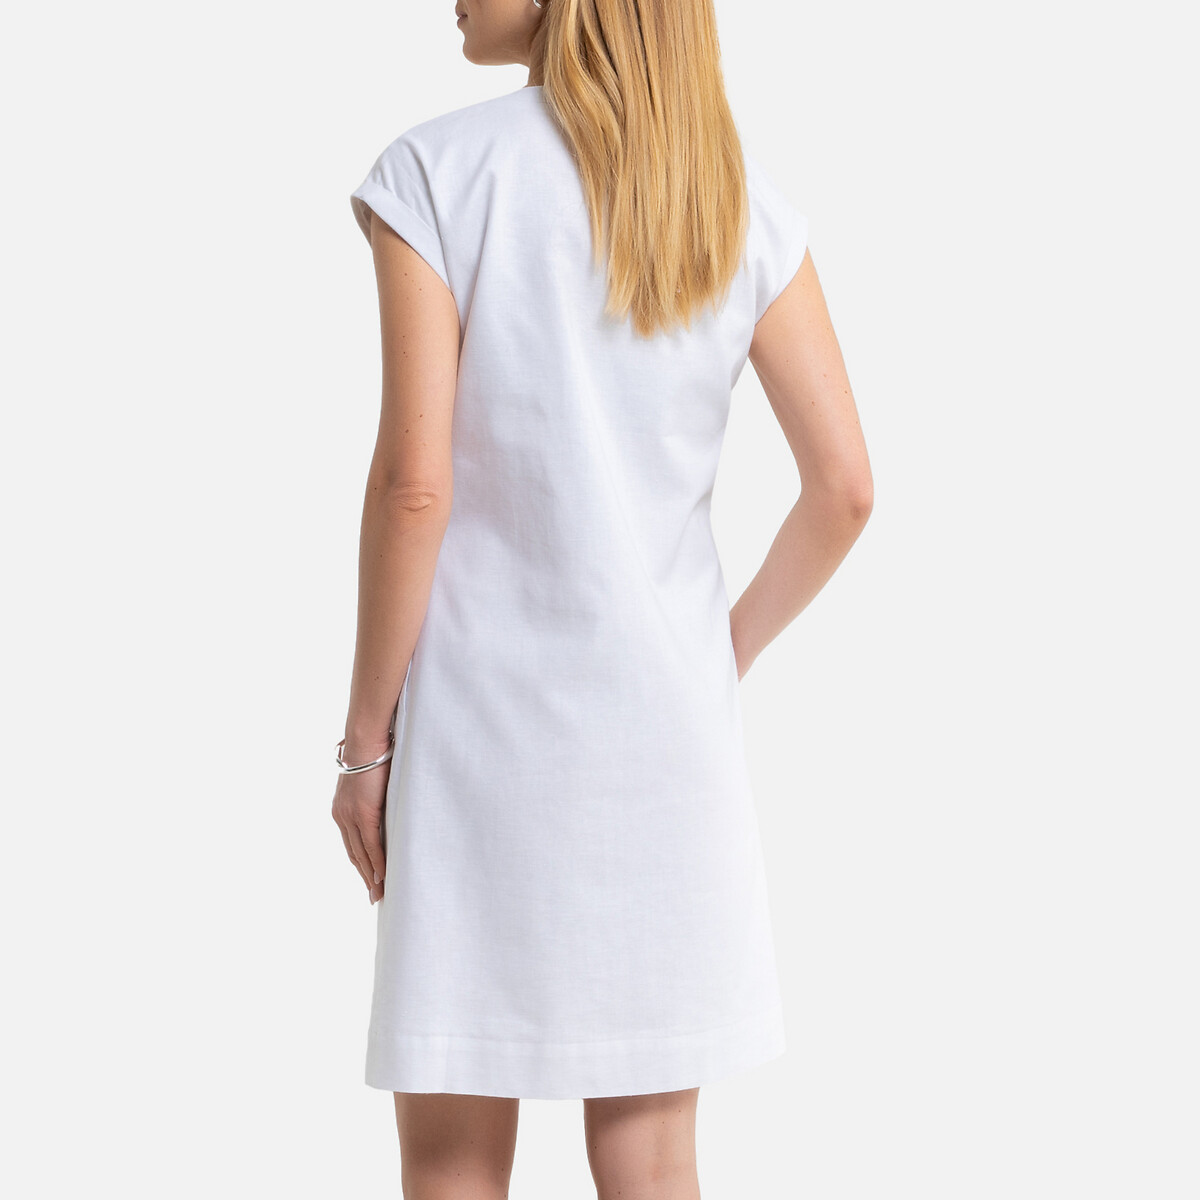 Платье-миди LaRedoute Прямое с короткими рукавами 50 (FR) - 56 (RUS) белый, размер 50 (FR) - 56 (RUS) Прямое с короткими рукавами 50 (FR) - 56 (RUS) белый - фото 4